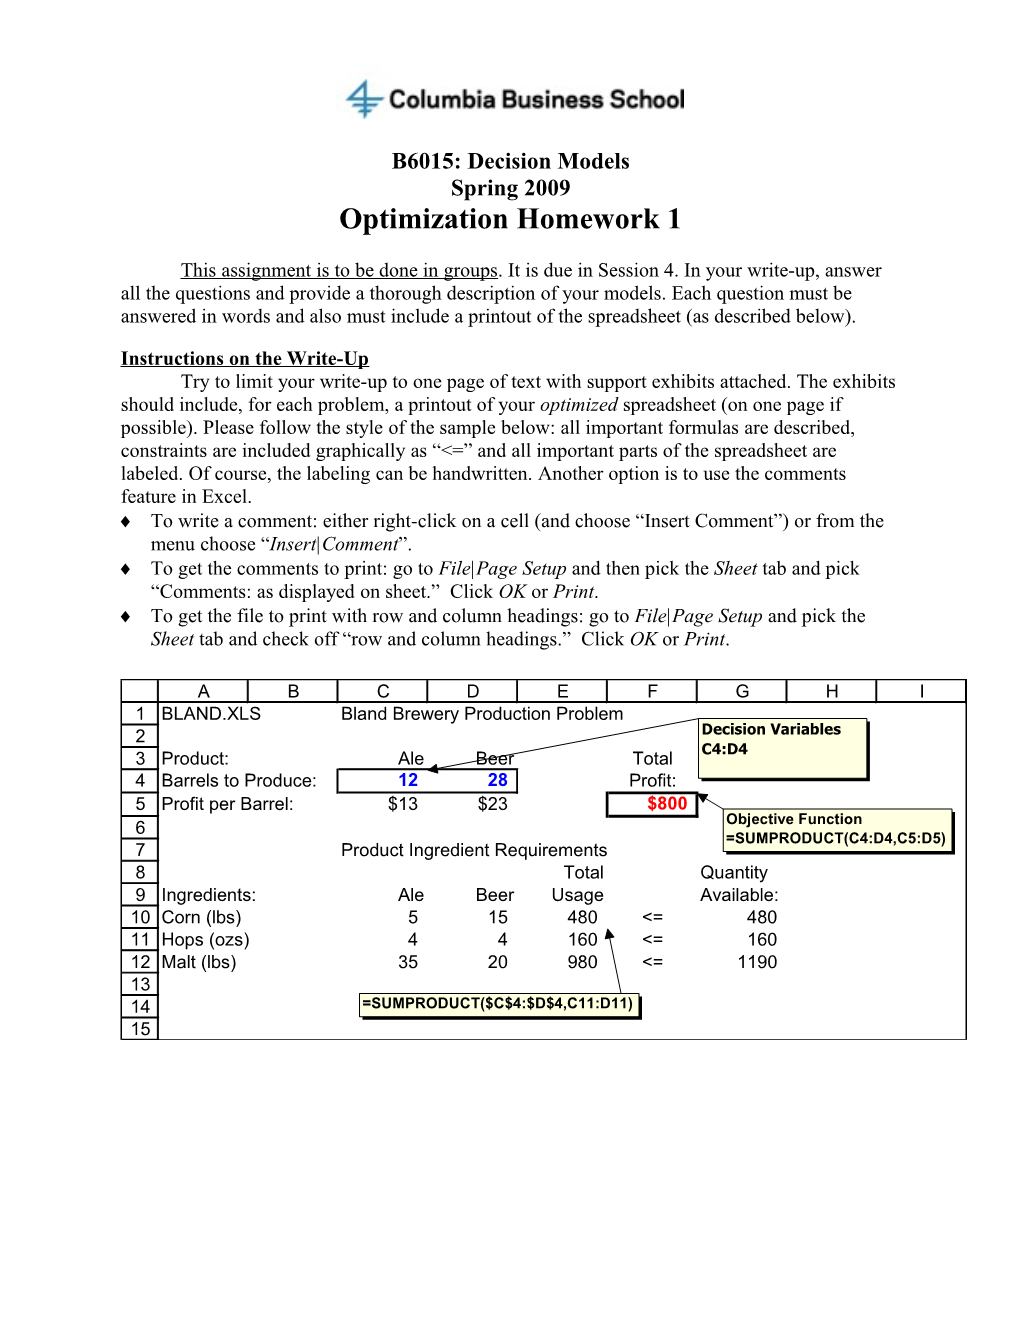 Optimization Homework 1